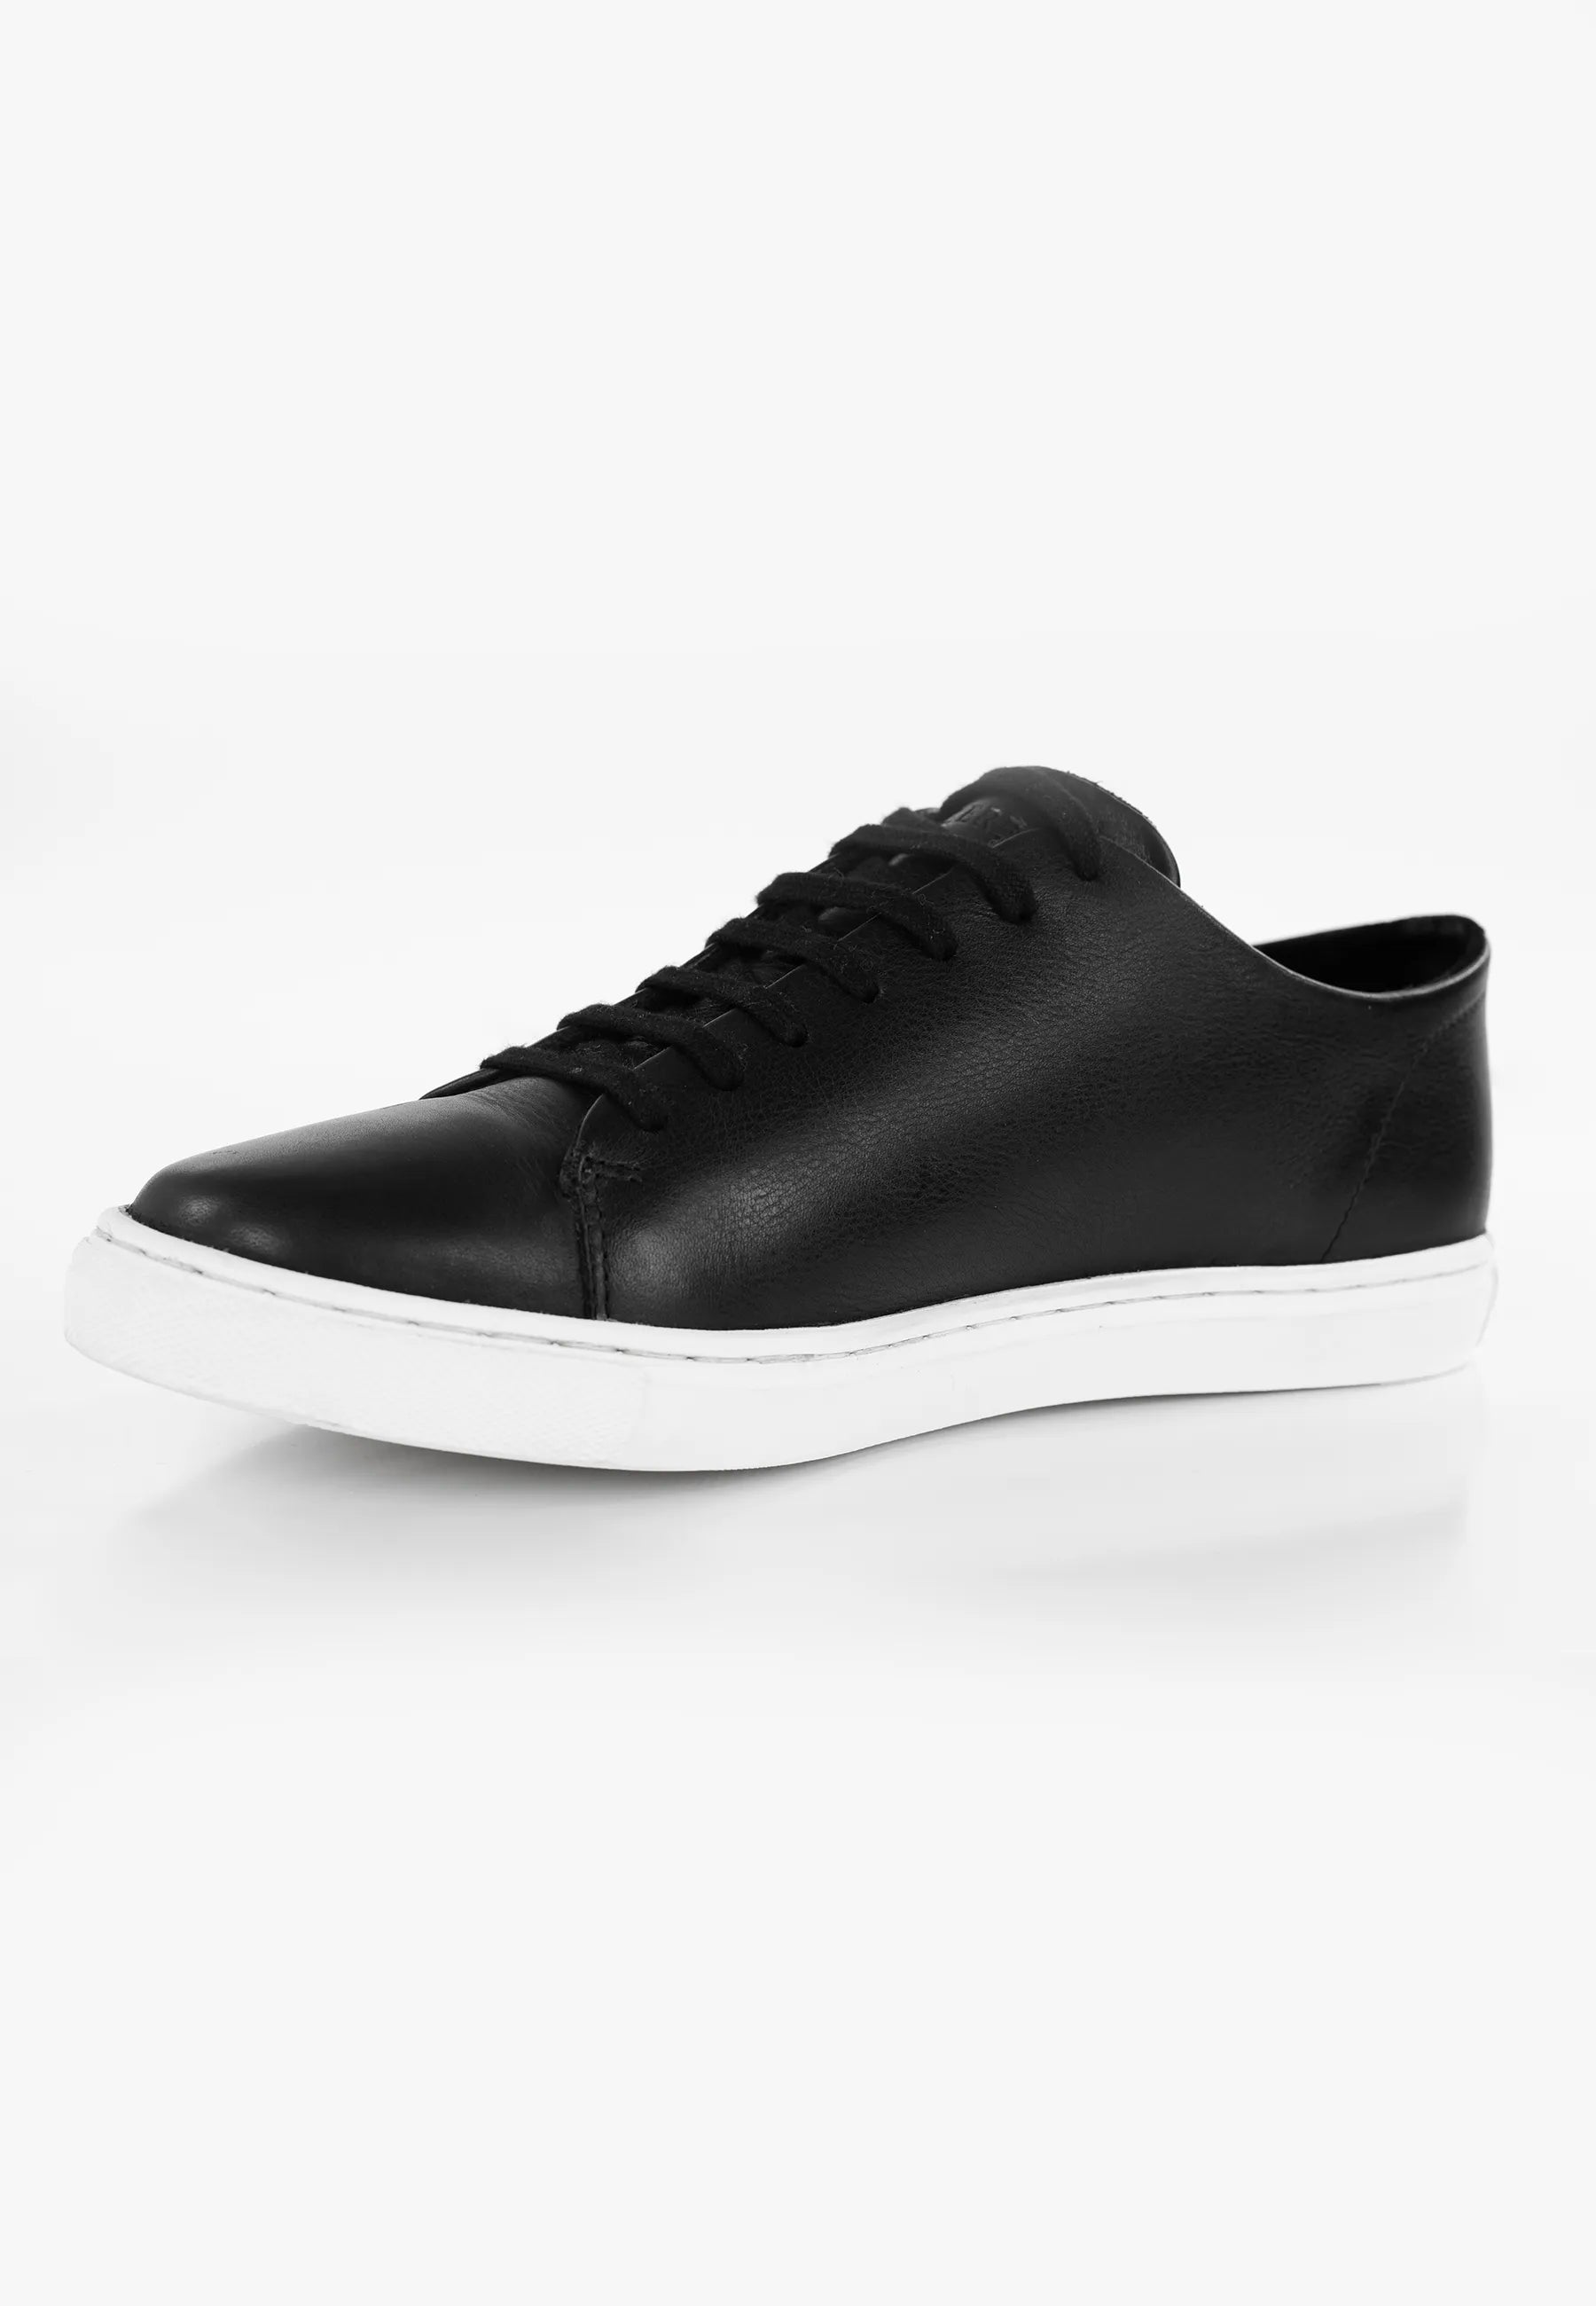 Dale leather sneaker - Black